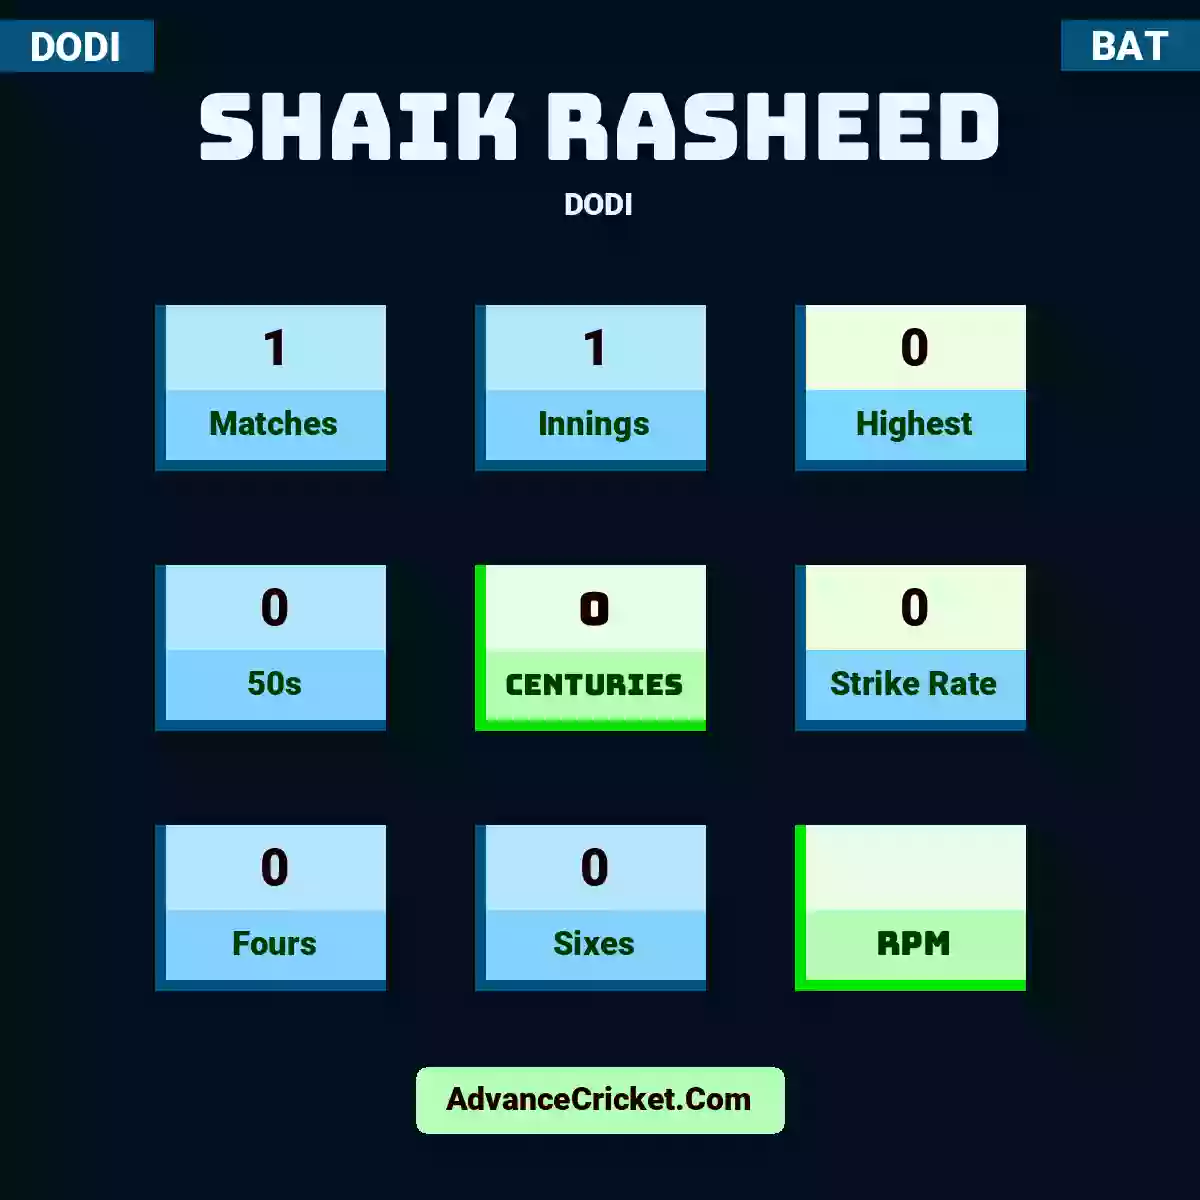 Shaik Rasheed DODI , Shaik Rasheed played 1 matches, scored 0 runs as highest, 0 half-centuries, and 0 centuries, with a strike rate of 0. S.Rasheed hit 0 fours and 0 sixes.